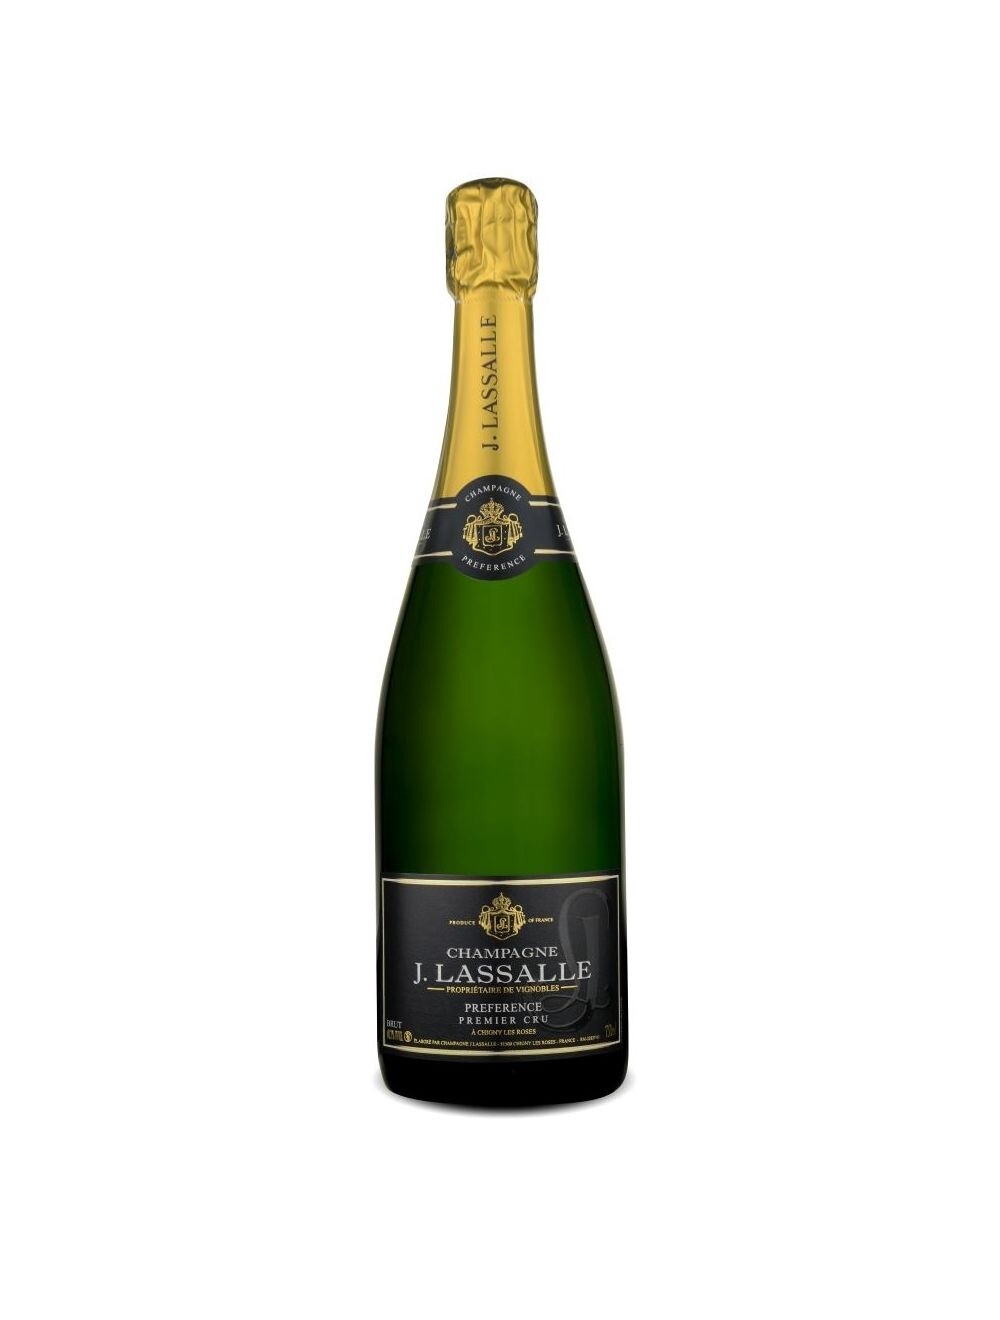 J. Lassalle Brut 1er cru Preference Champagne (750ml)